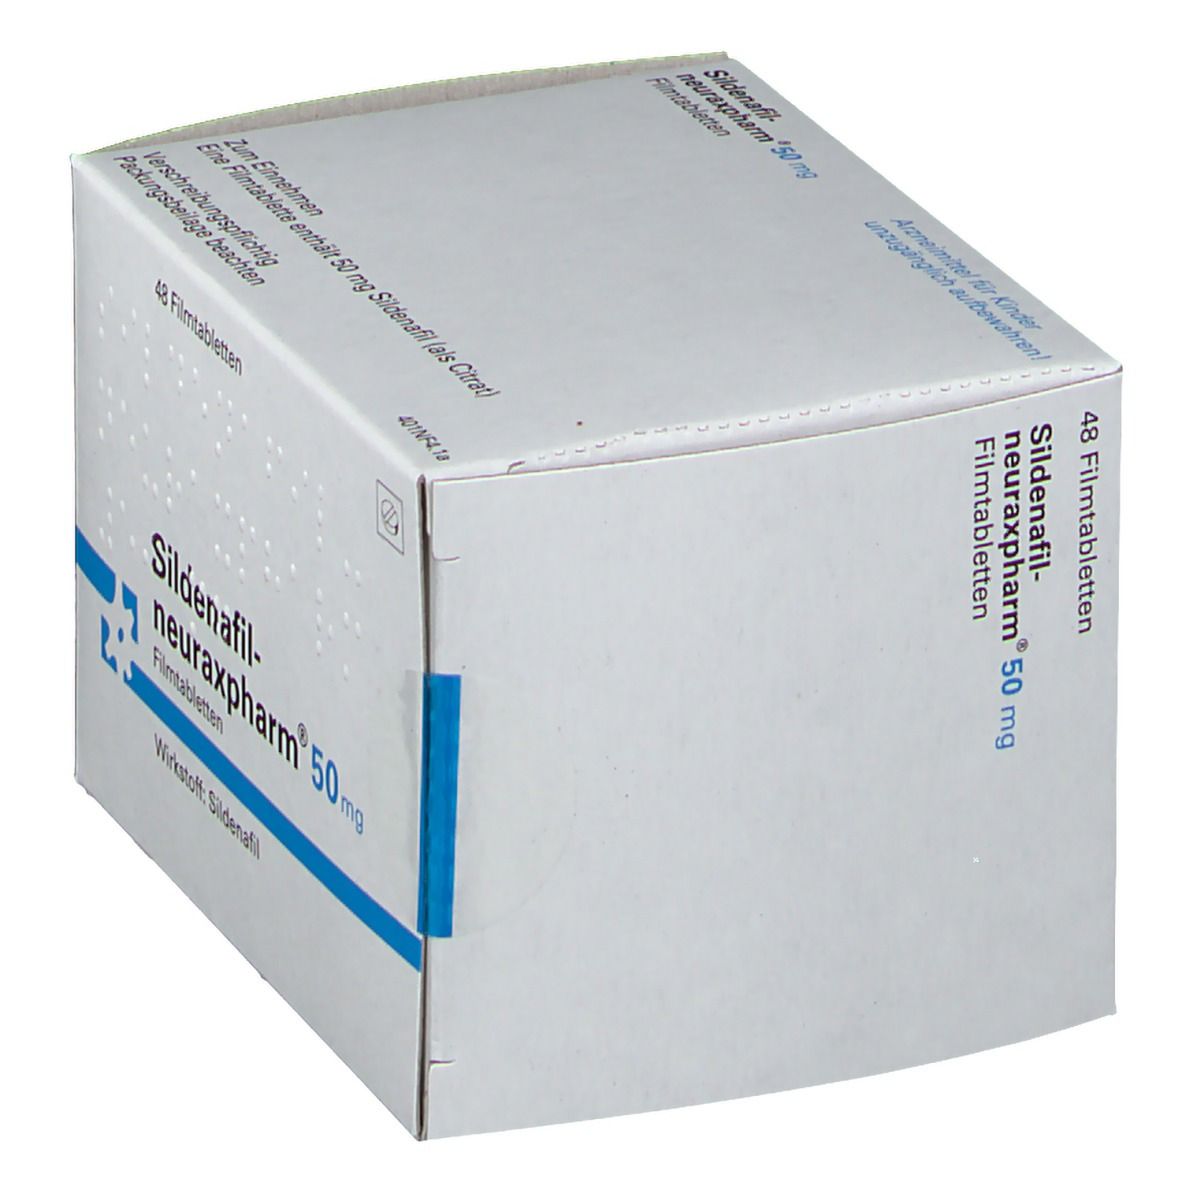 Sildenafil-neuraxpharm® 50 mg